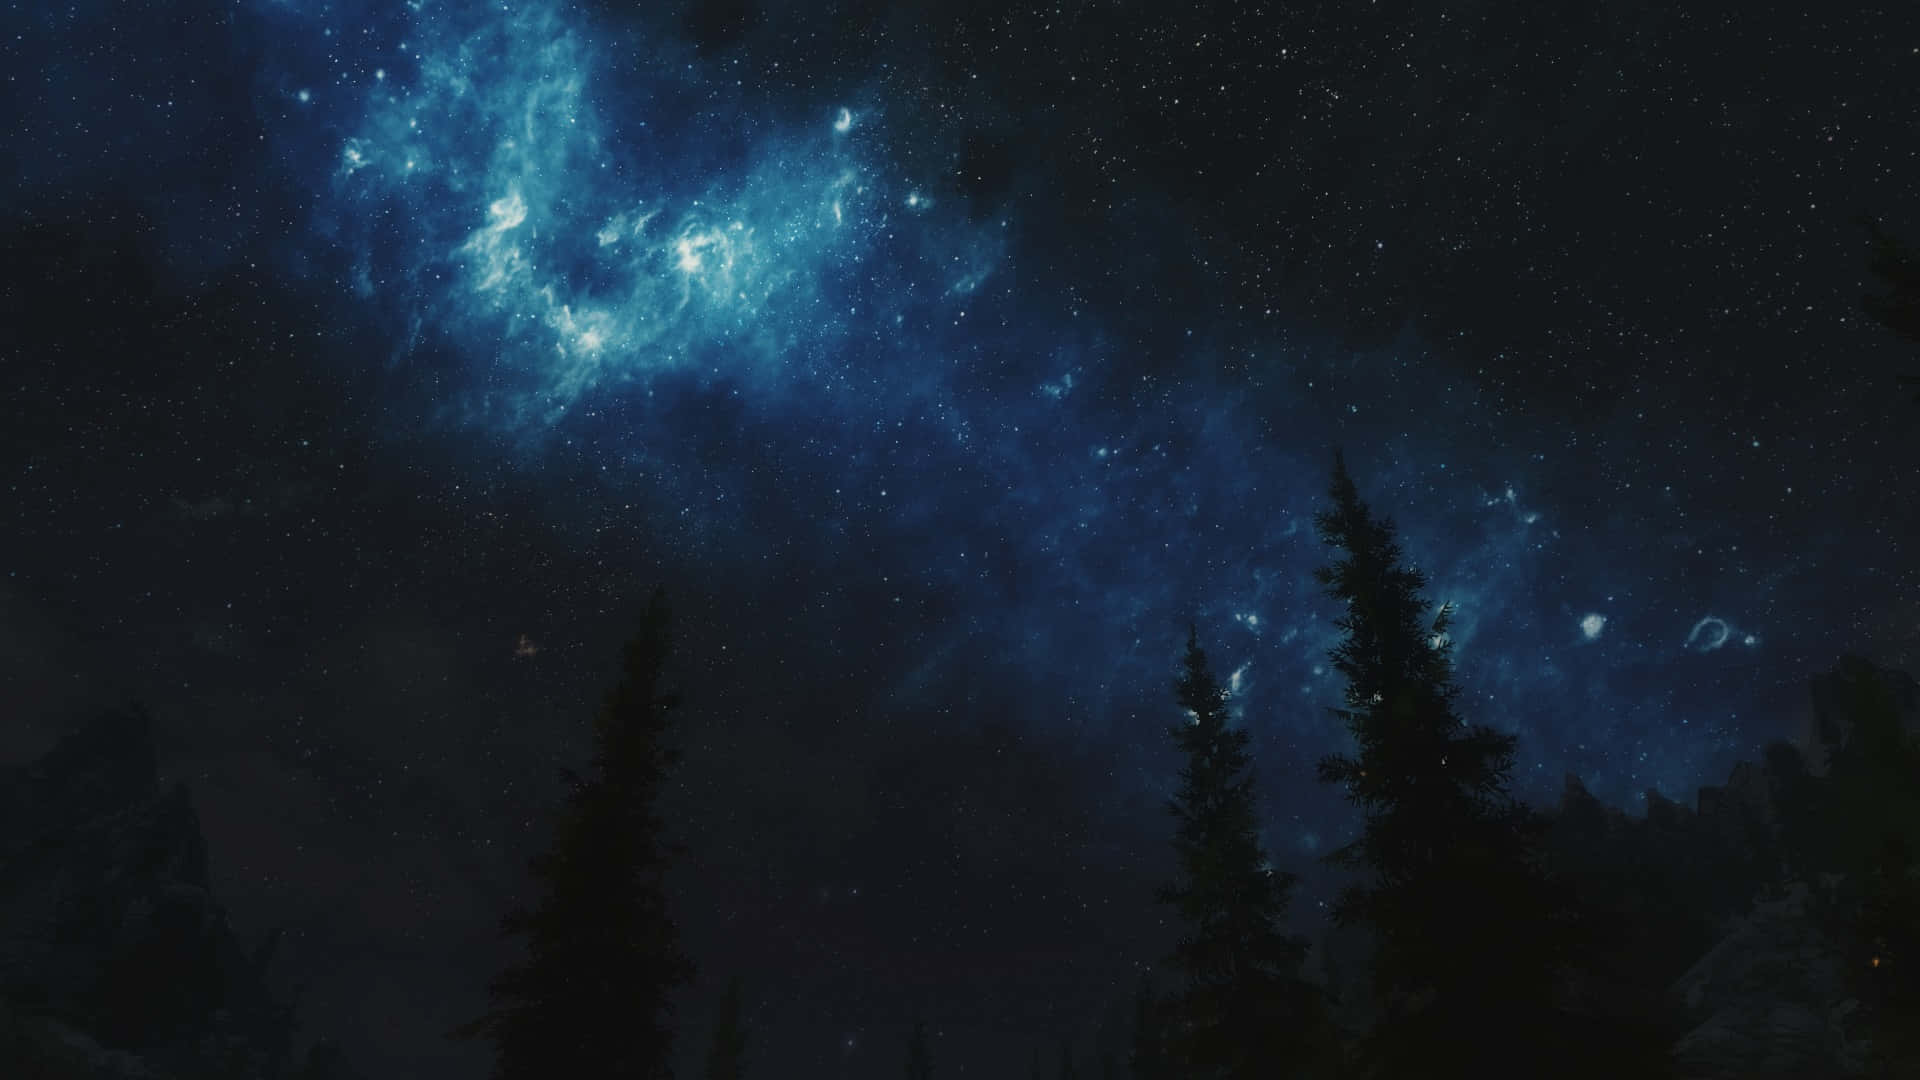 the elder scrolls - a night sky with stars